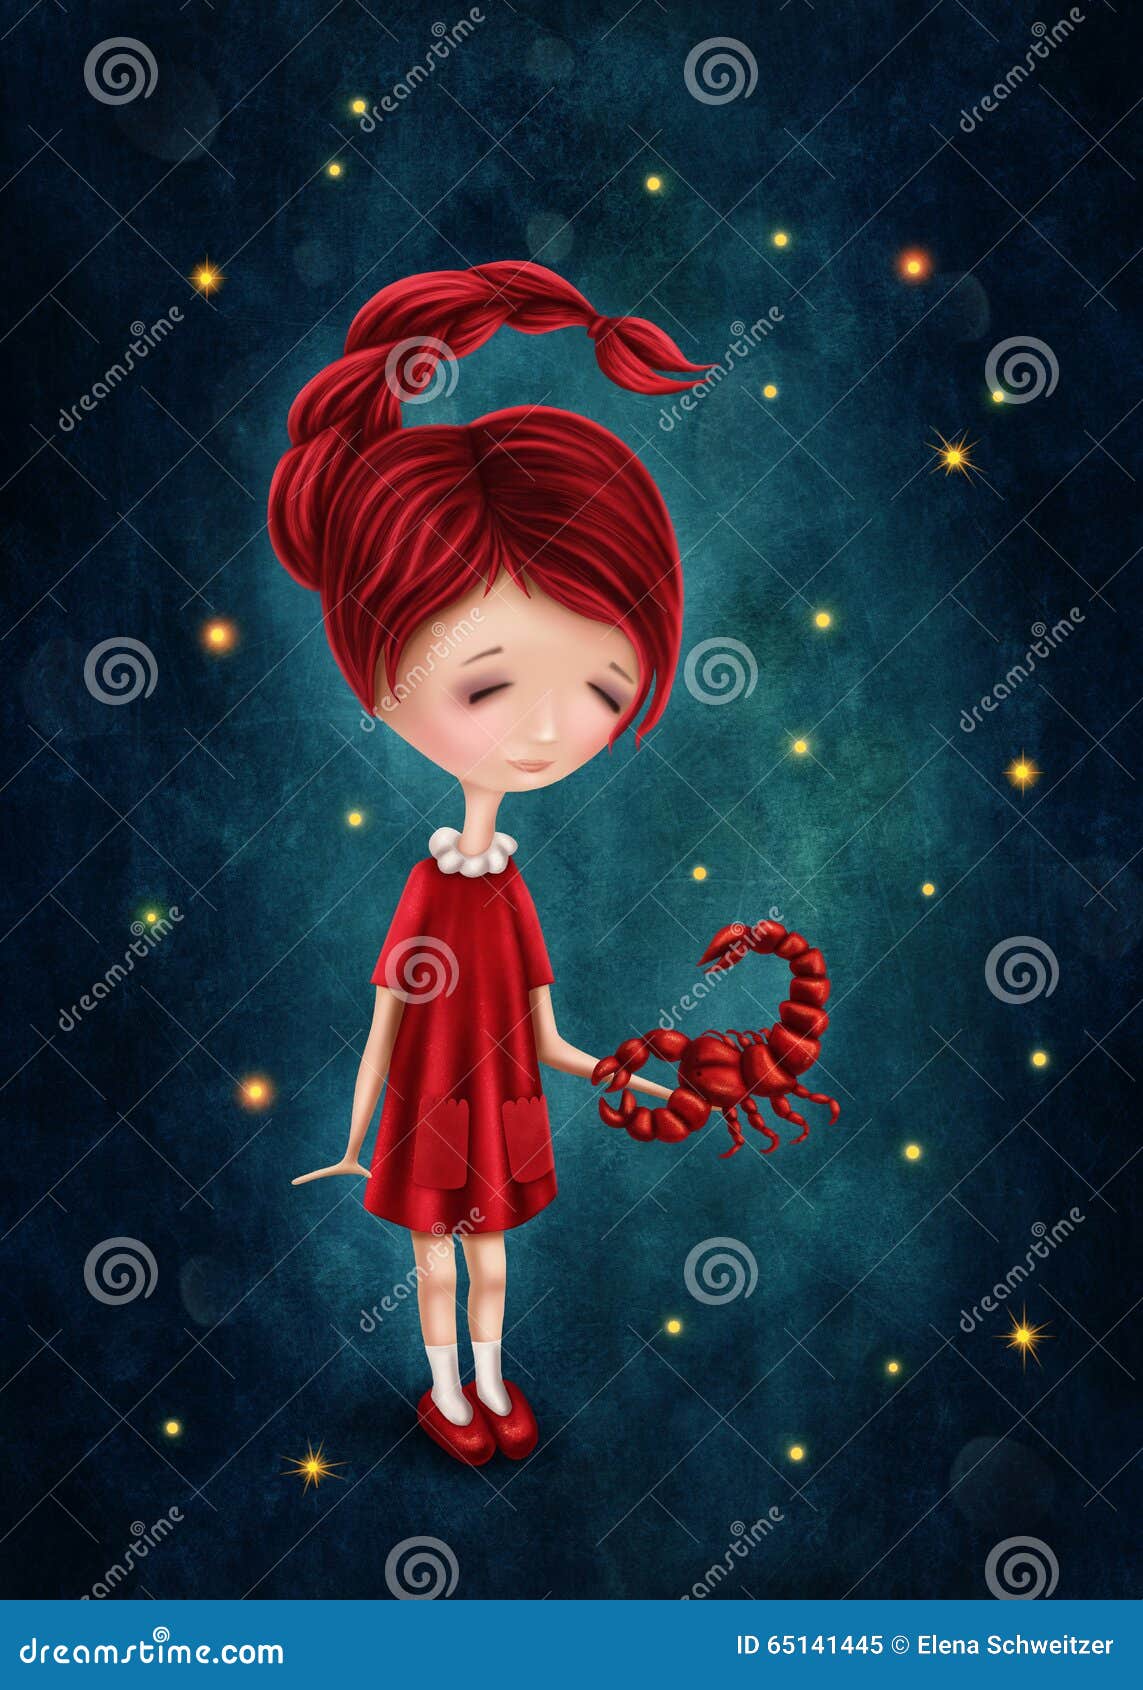 scorpio astrological sign girl